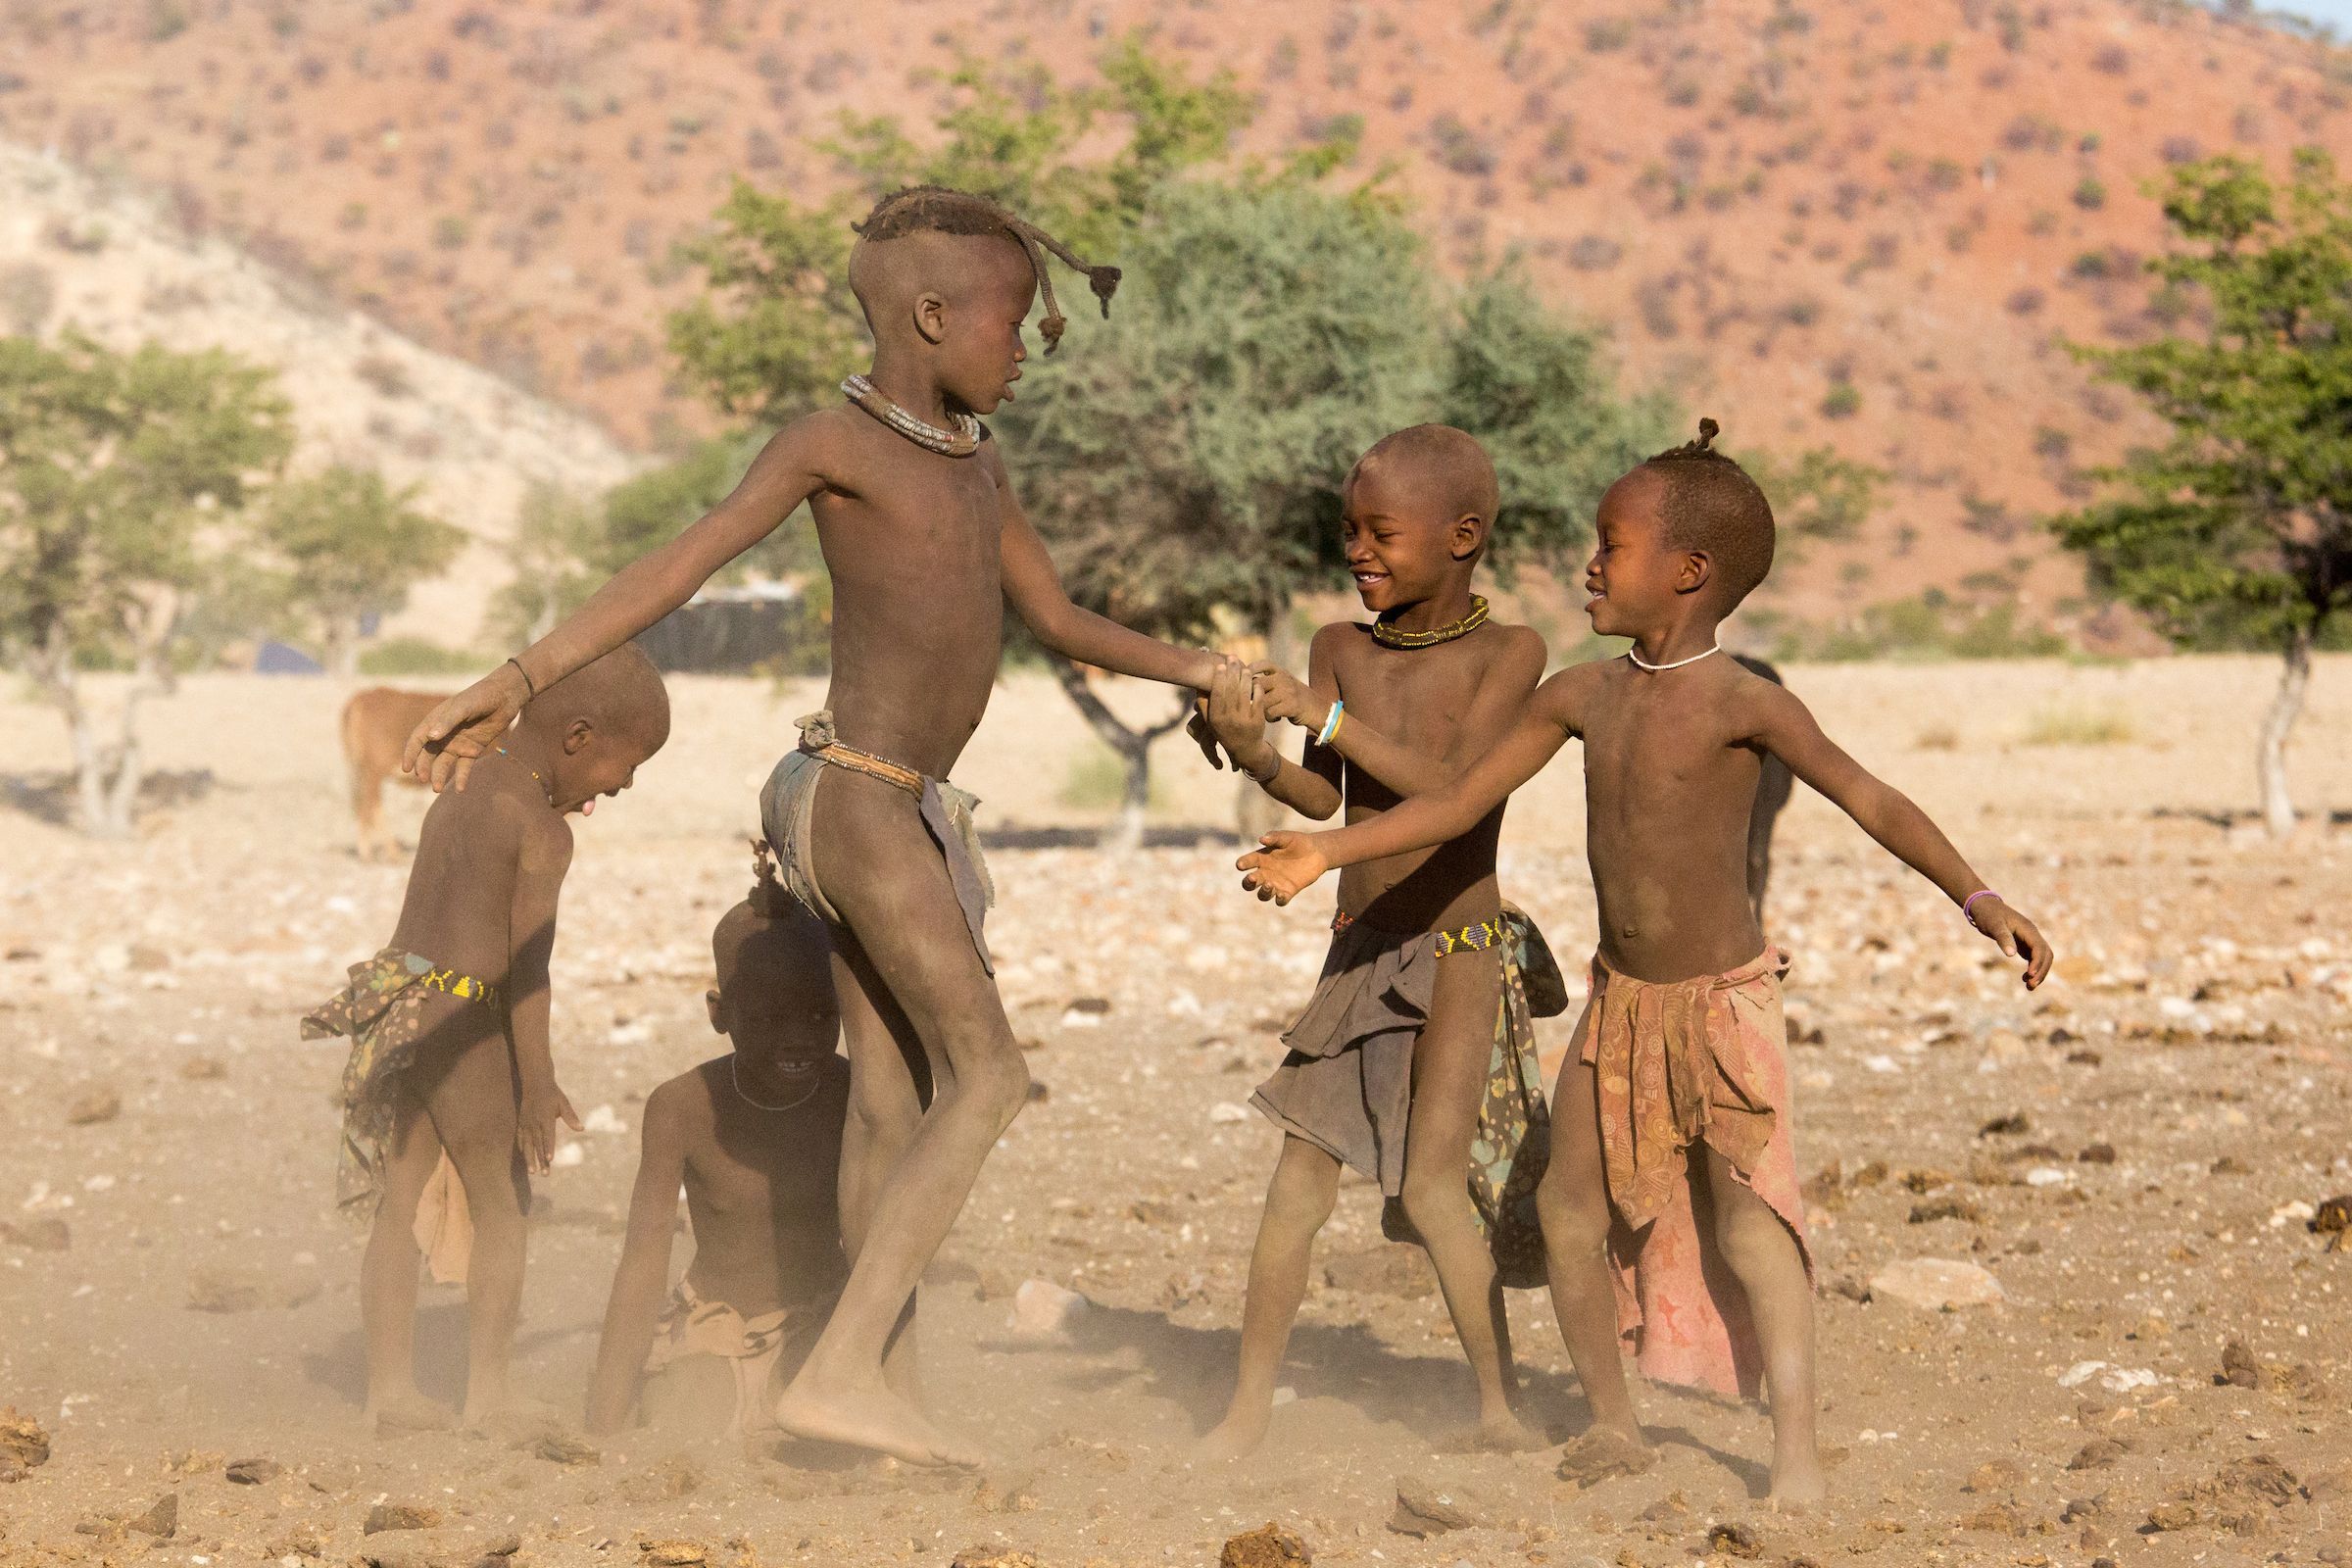 Himba children playing in remote Kaokoland, northern Namibia